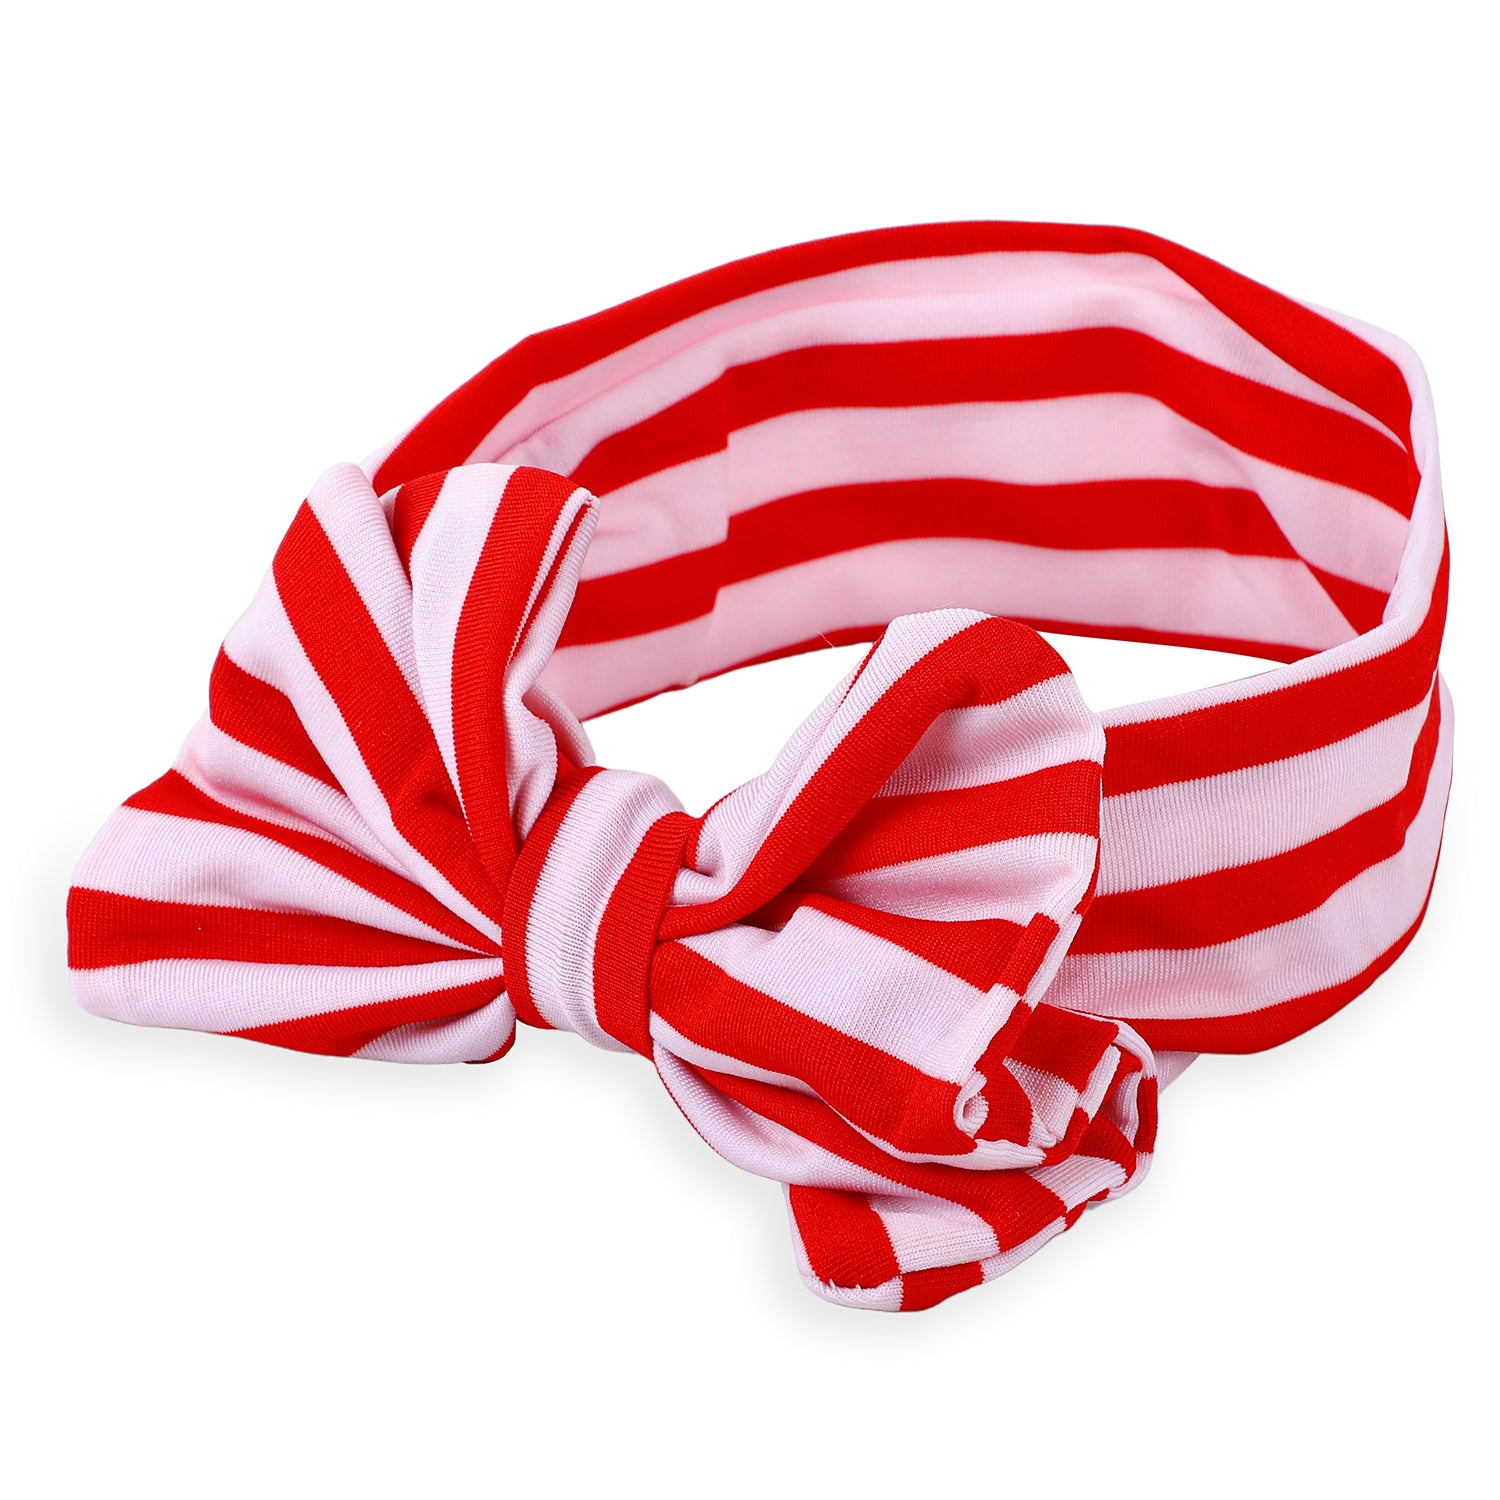 Stripes Soft Bow Headband - Red